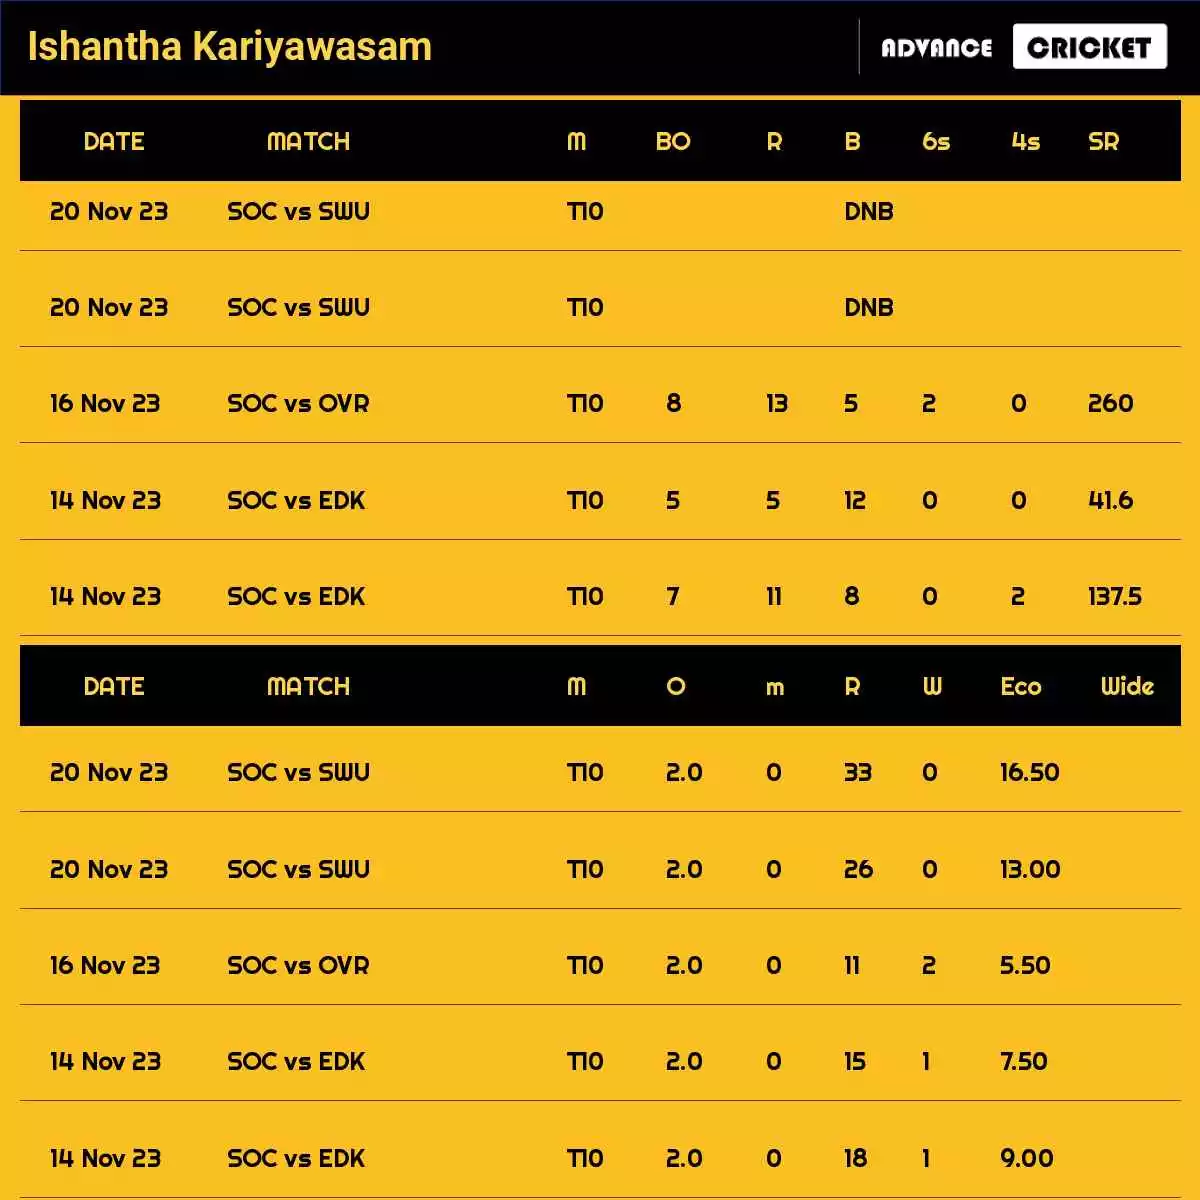 Ishantha Kariyawasam Recent Matches Details Date Wise